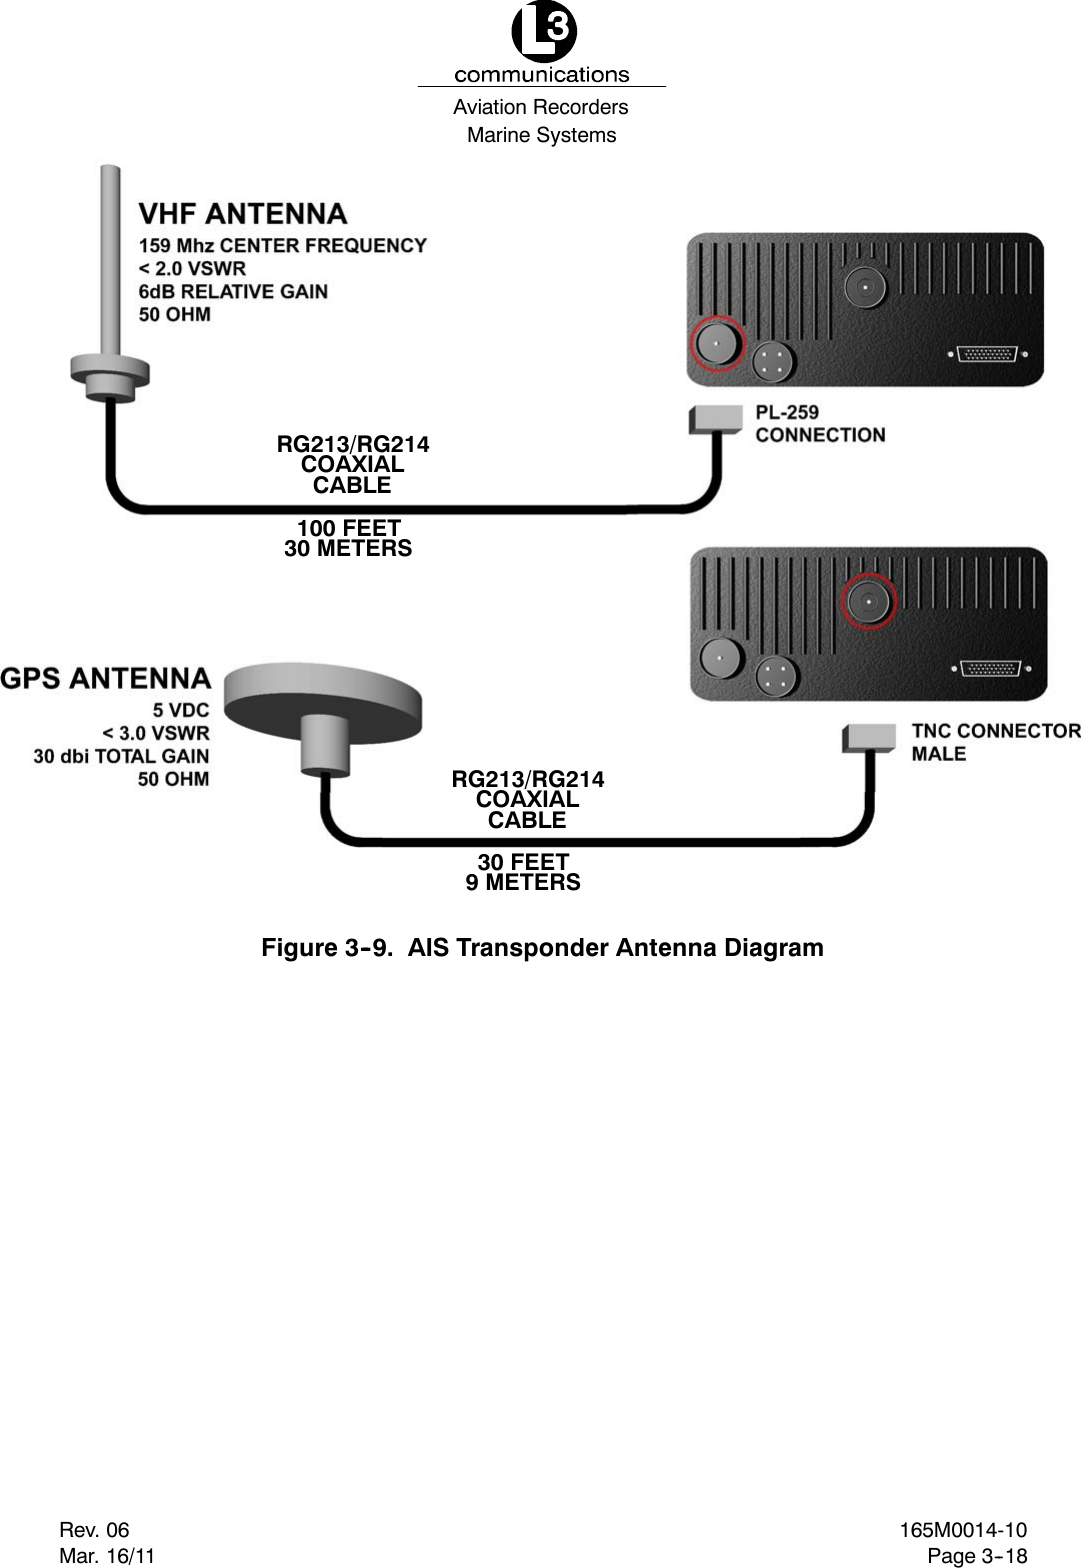 Marine SystemsAviation RecordersRev. 06Mar. 16/11165M0014-10Page 3--18RG213/RG214COAXIALCABLE100 FEET30 METERSRG213/RG214COAXIALCABLE30 FEET9 METERSFigure 3--9. AIS Transponder Antenna Diagram